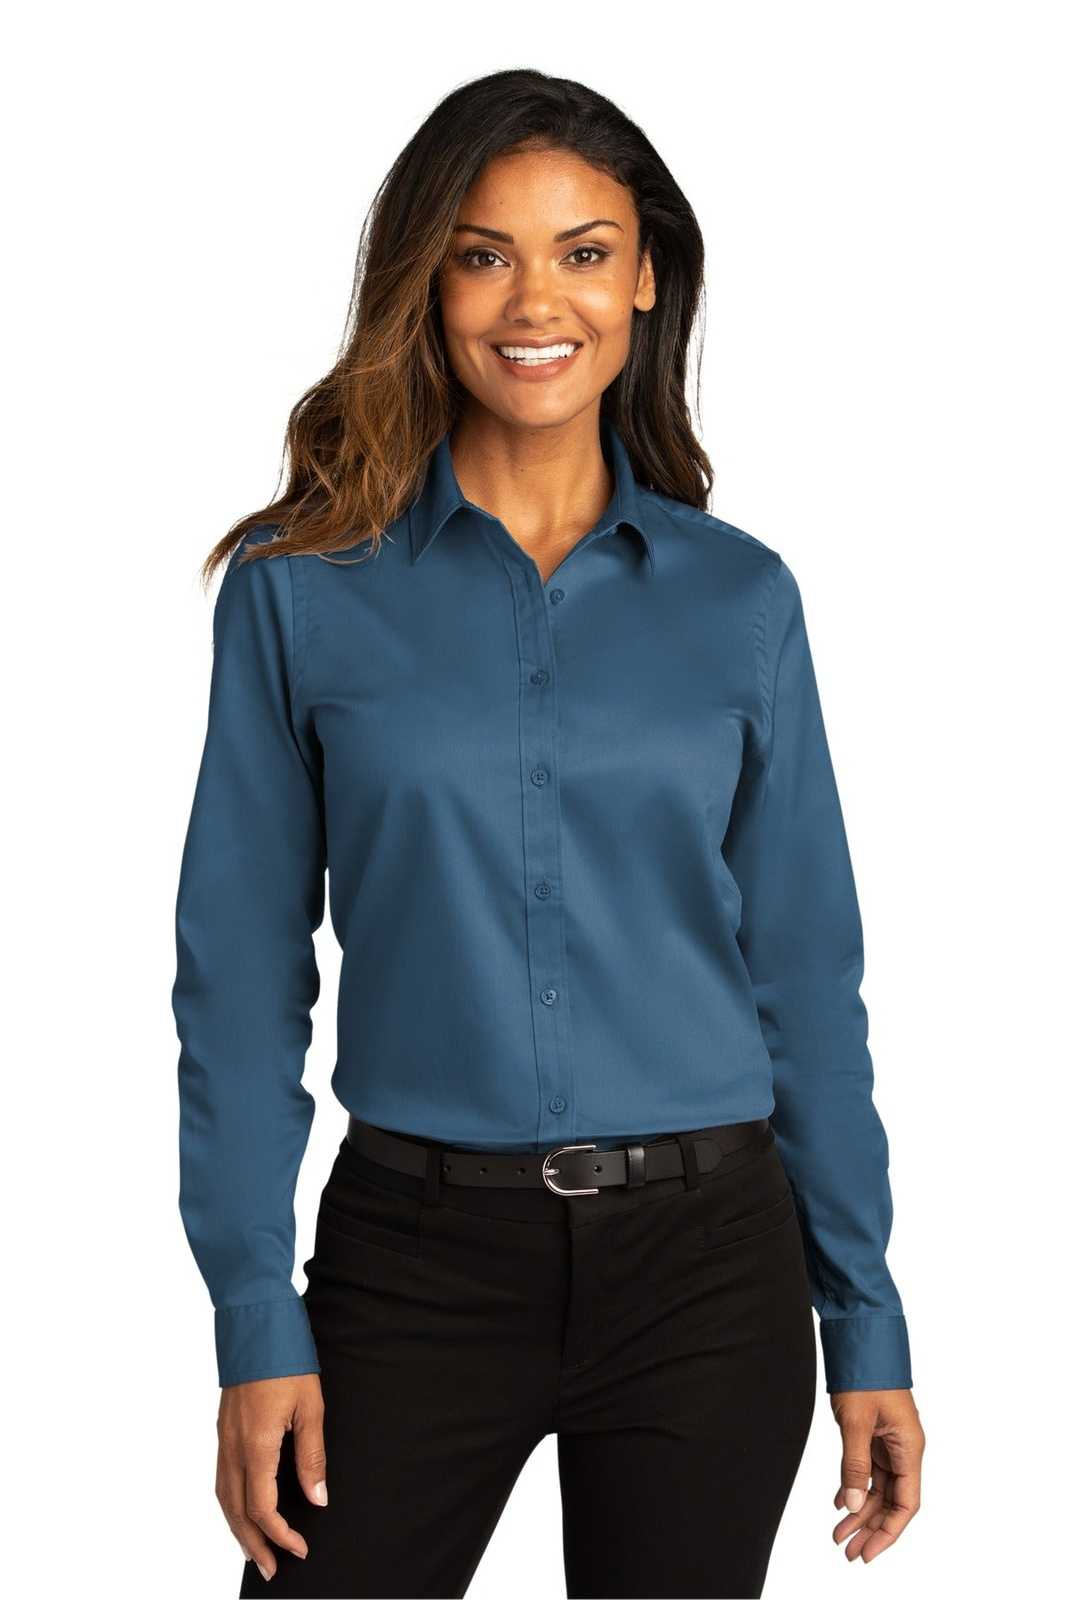 Port Authority LW808 Ladies Long Sleeve SuperPro React Twill Shirt - Regatta Blue - HIT a Double - 1